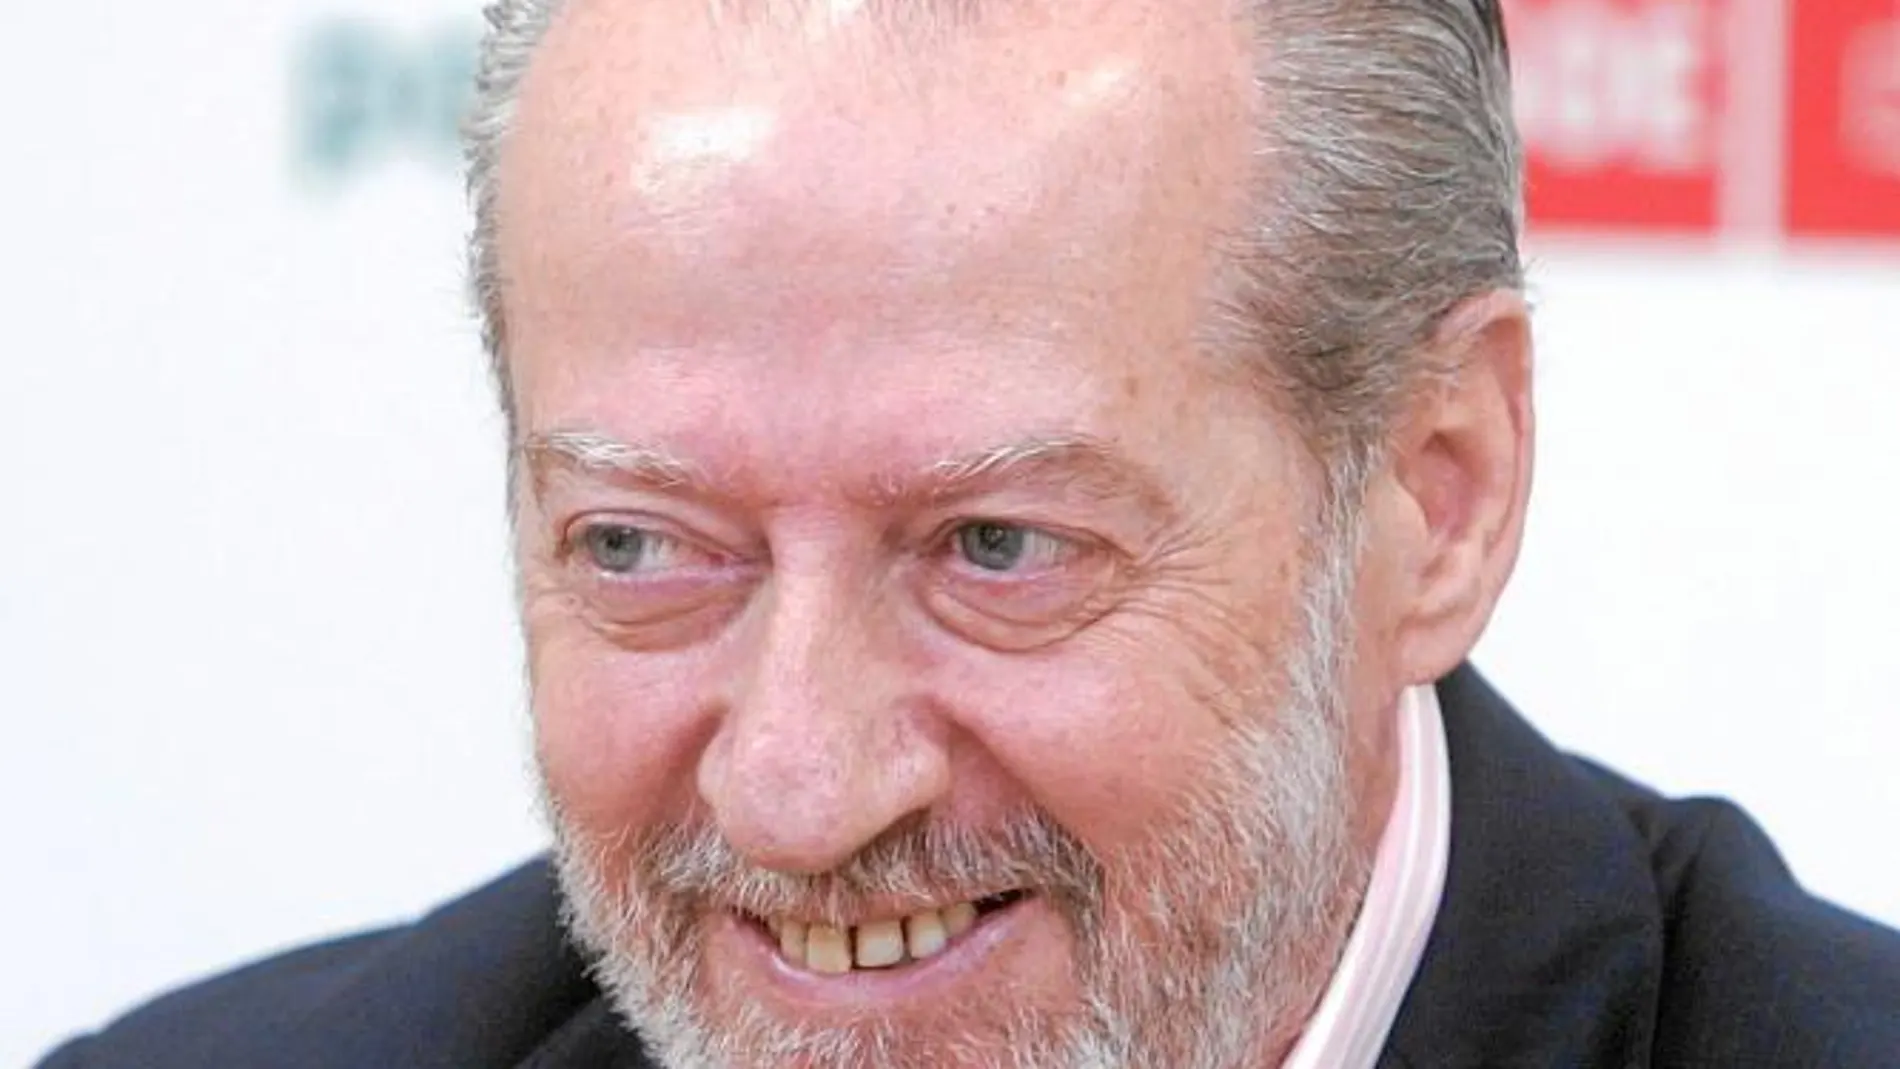 Fernando Rodríguez Villalobos